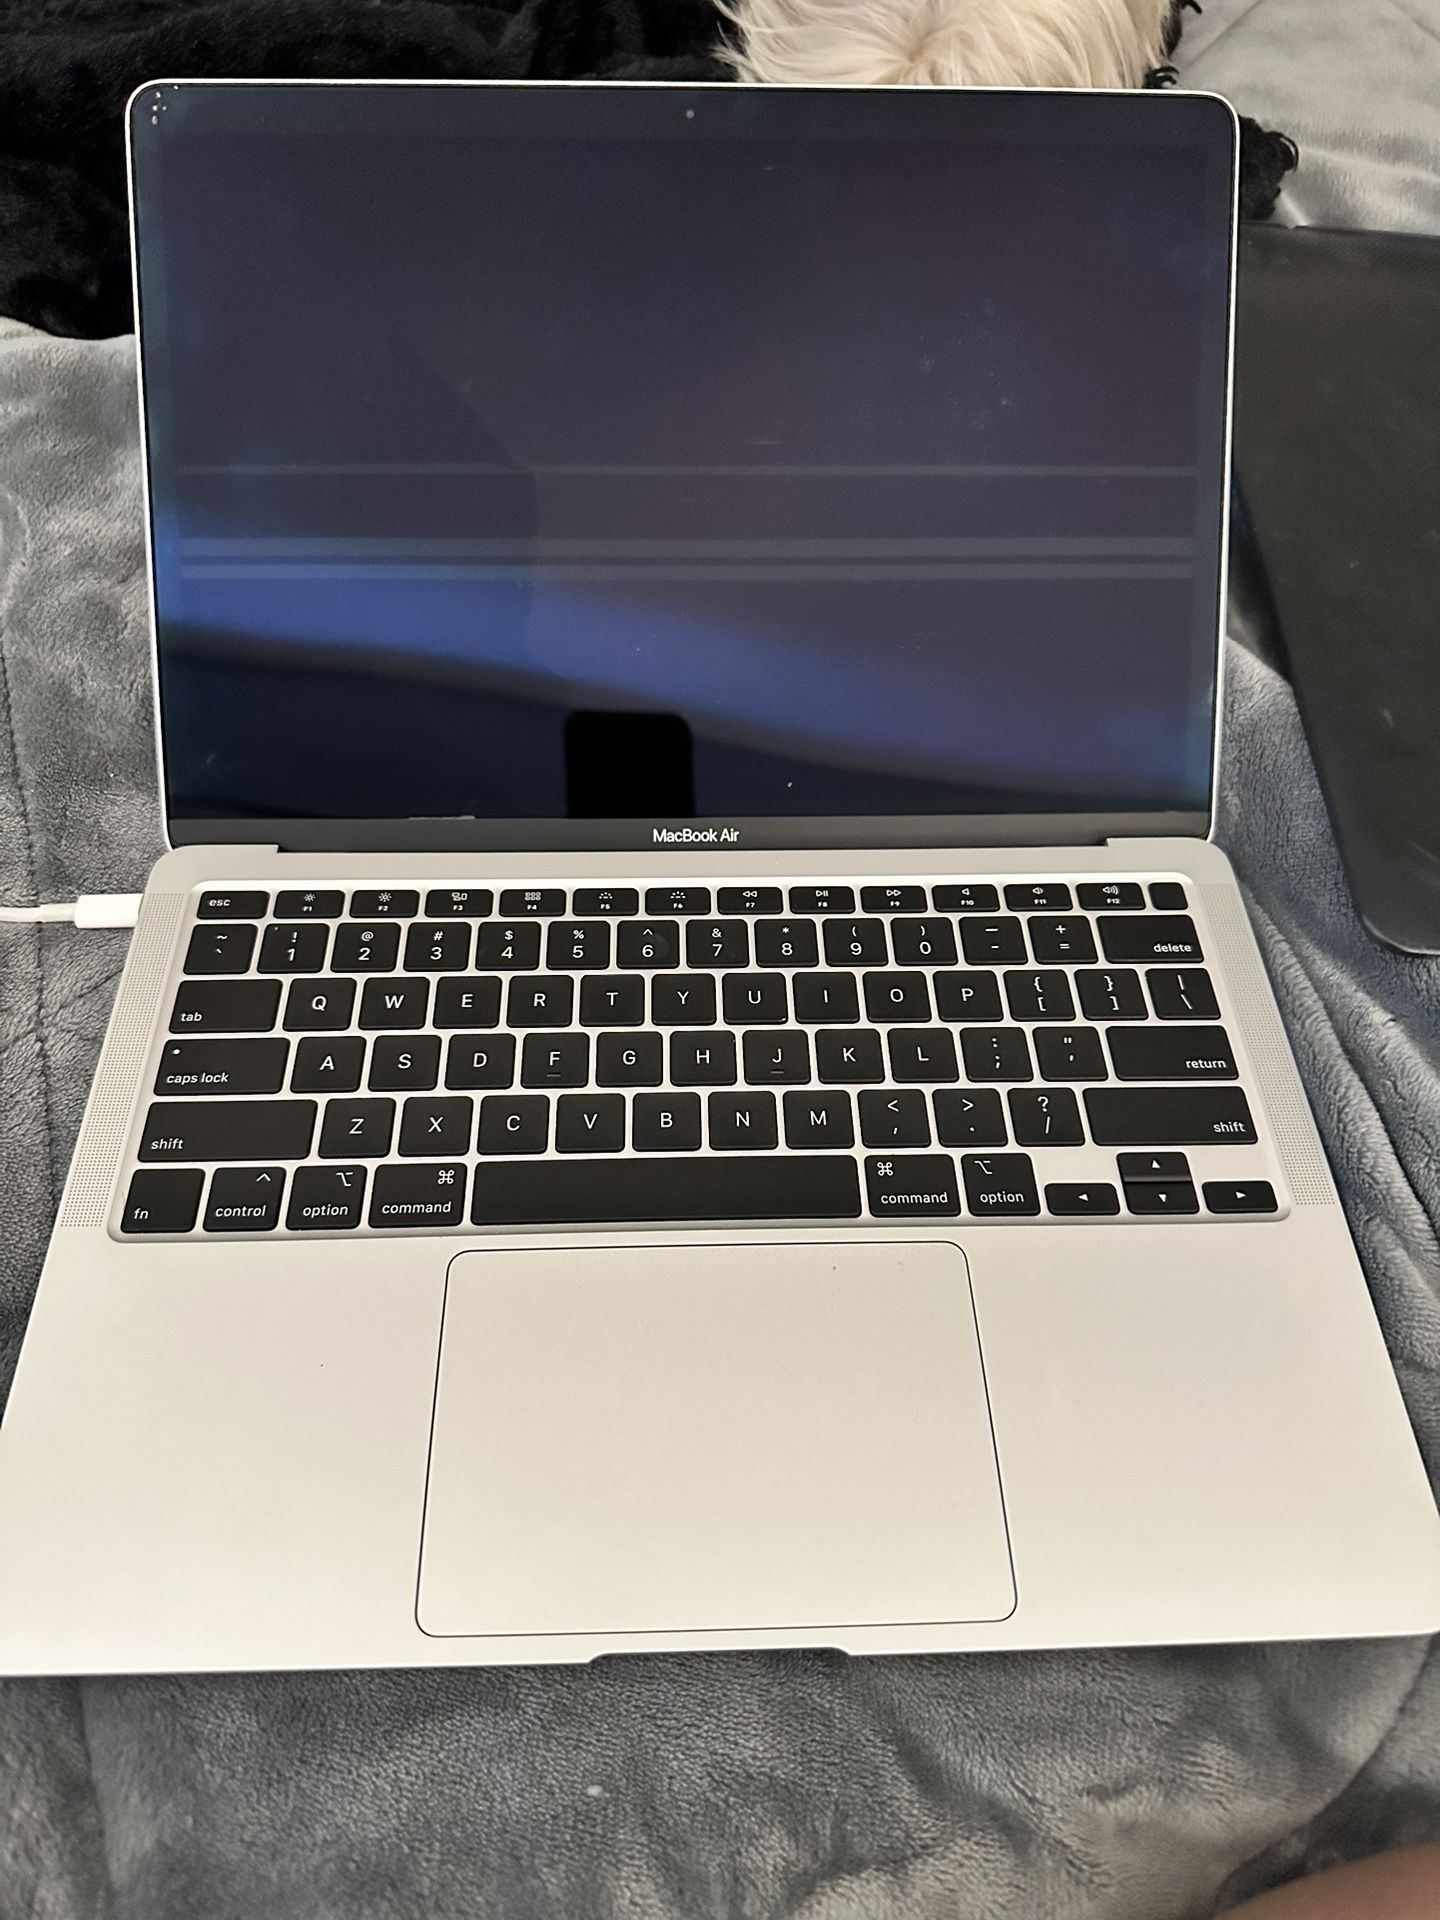 Selling broken MacBook Air 13.3” Laptop for parts